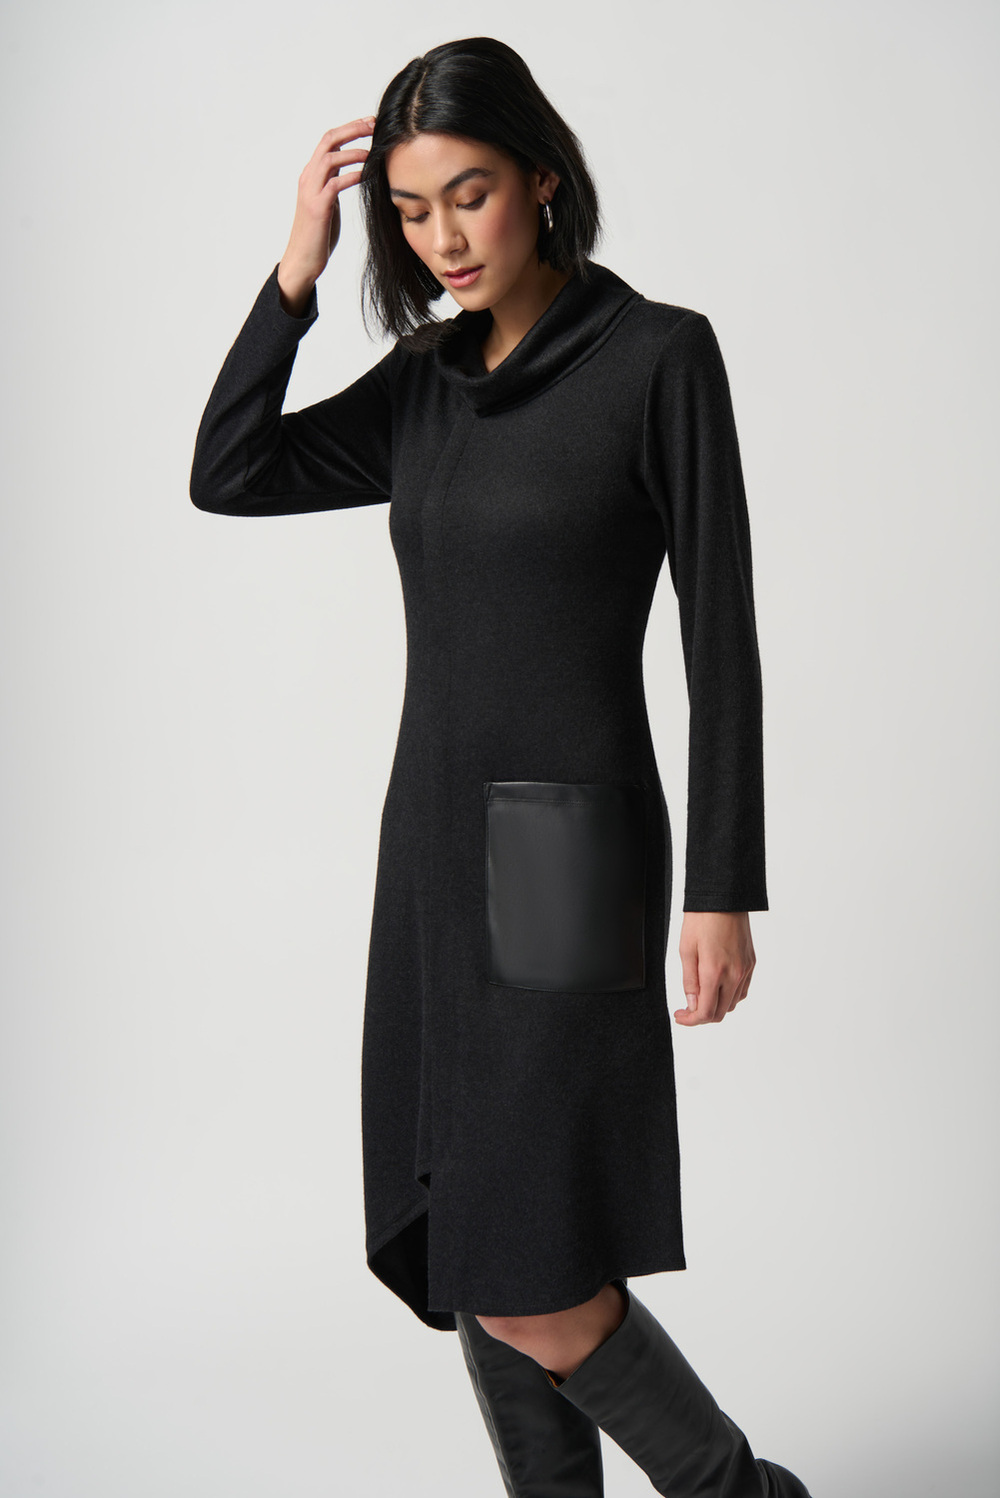 Mock Neck Dress Style 234160. Charcoal Grey/black